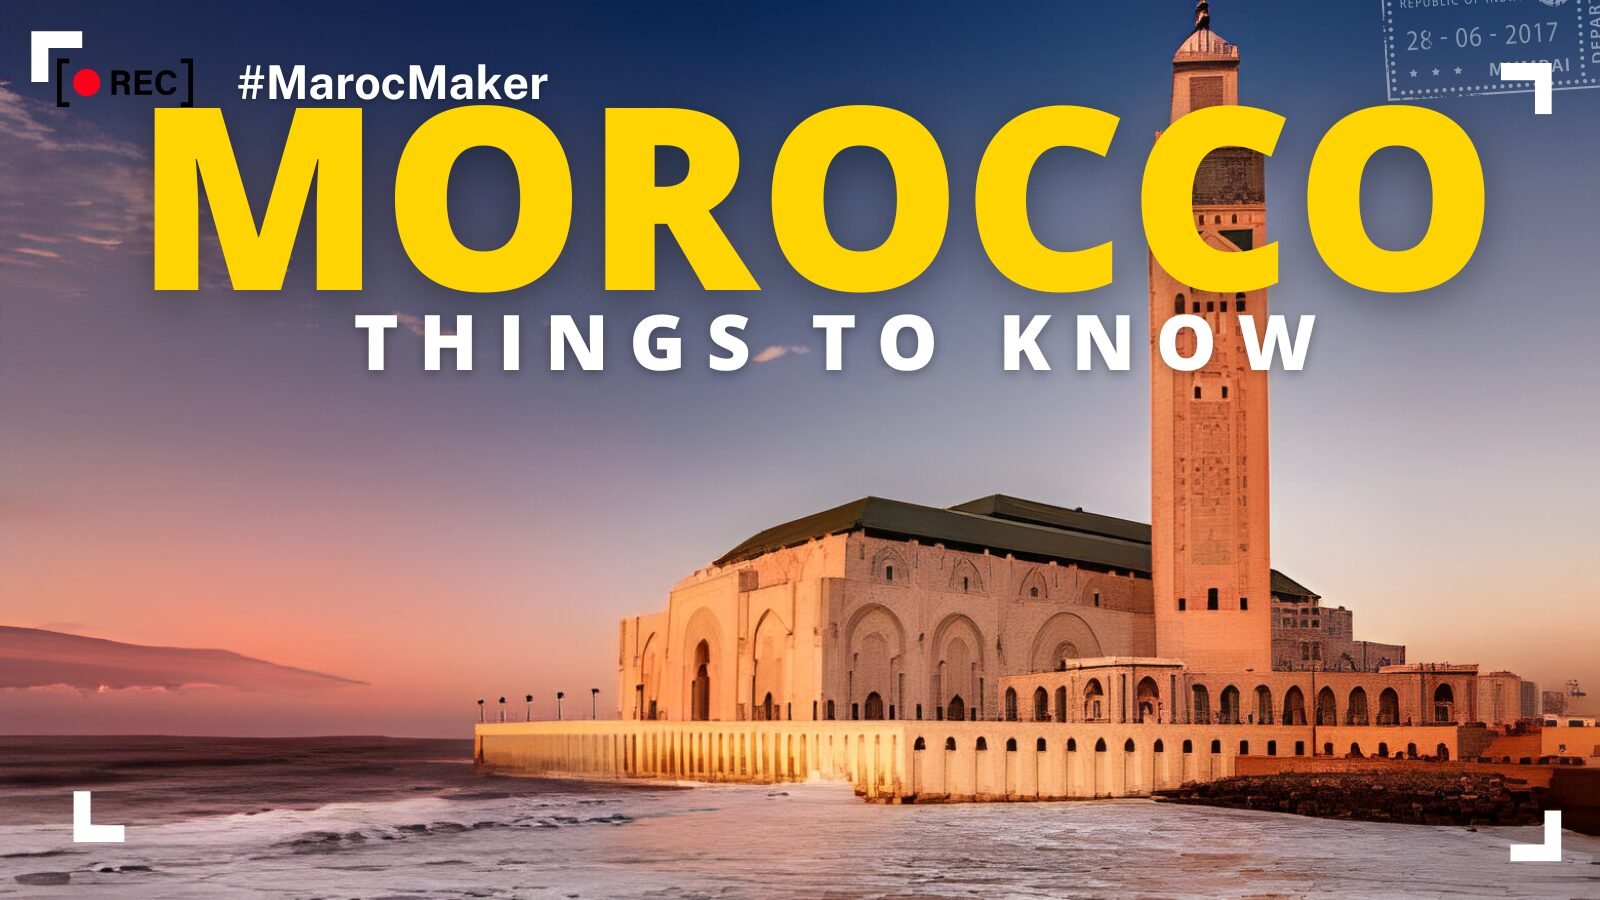 marocmaker-morocco (1)